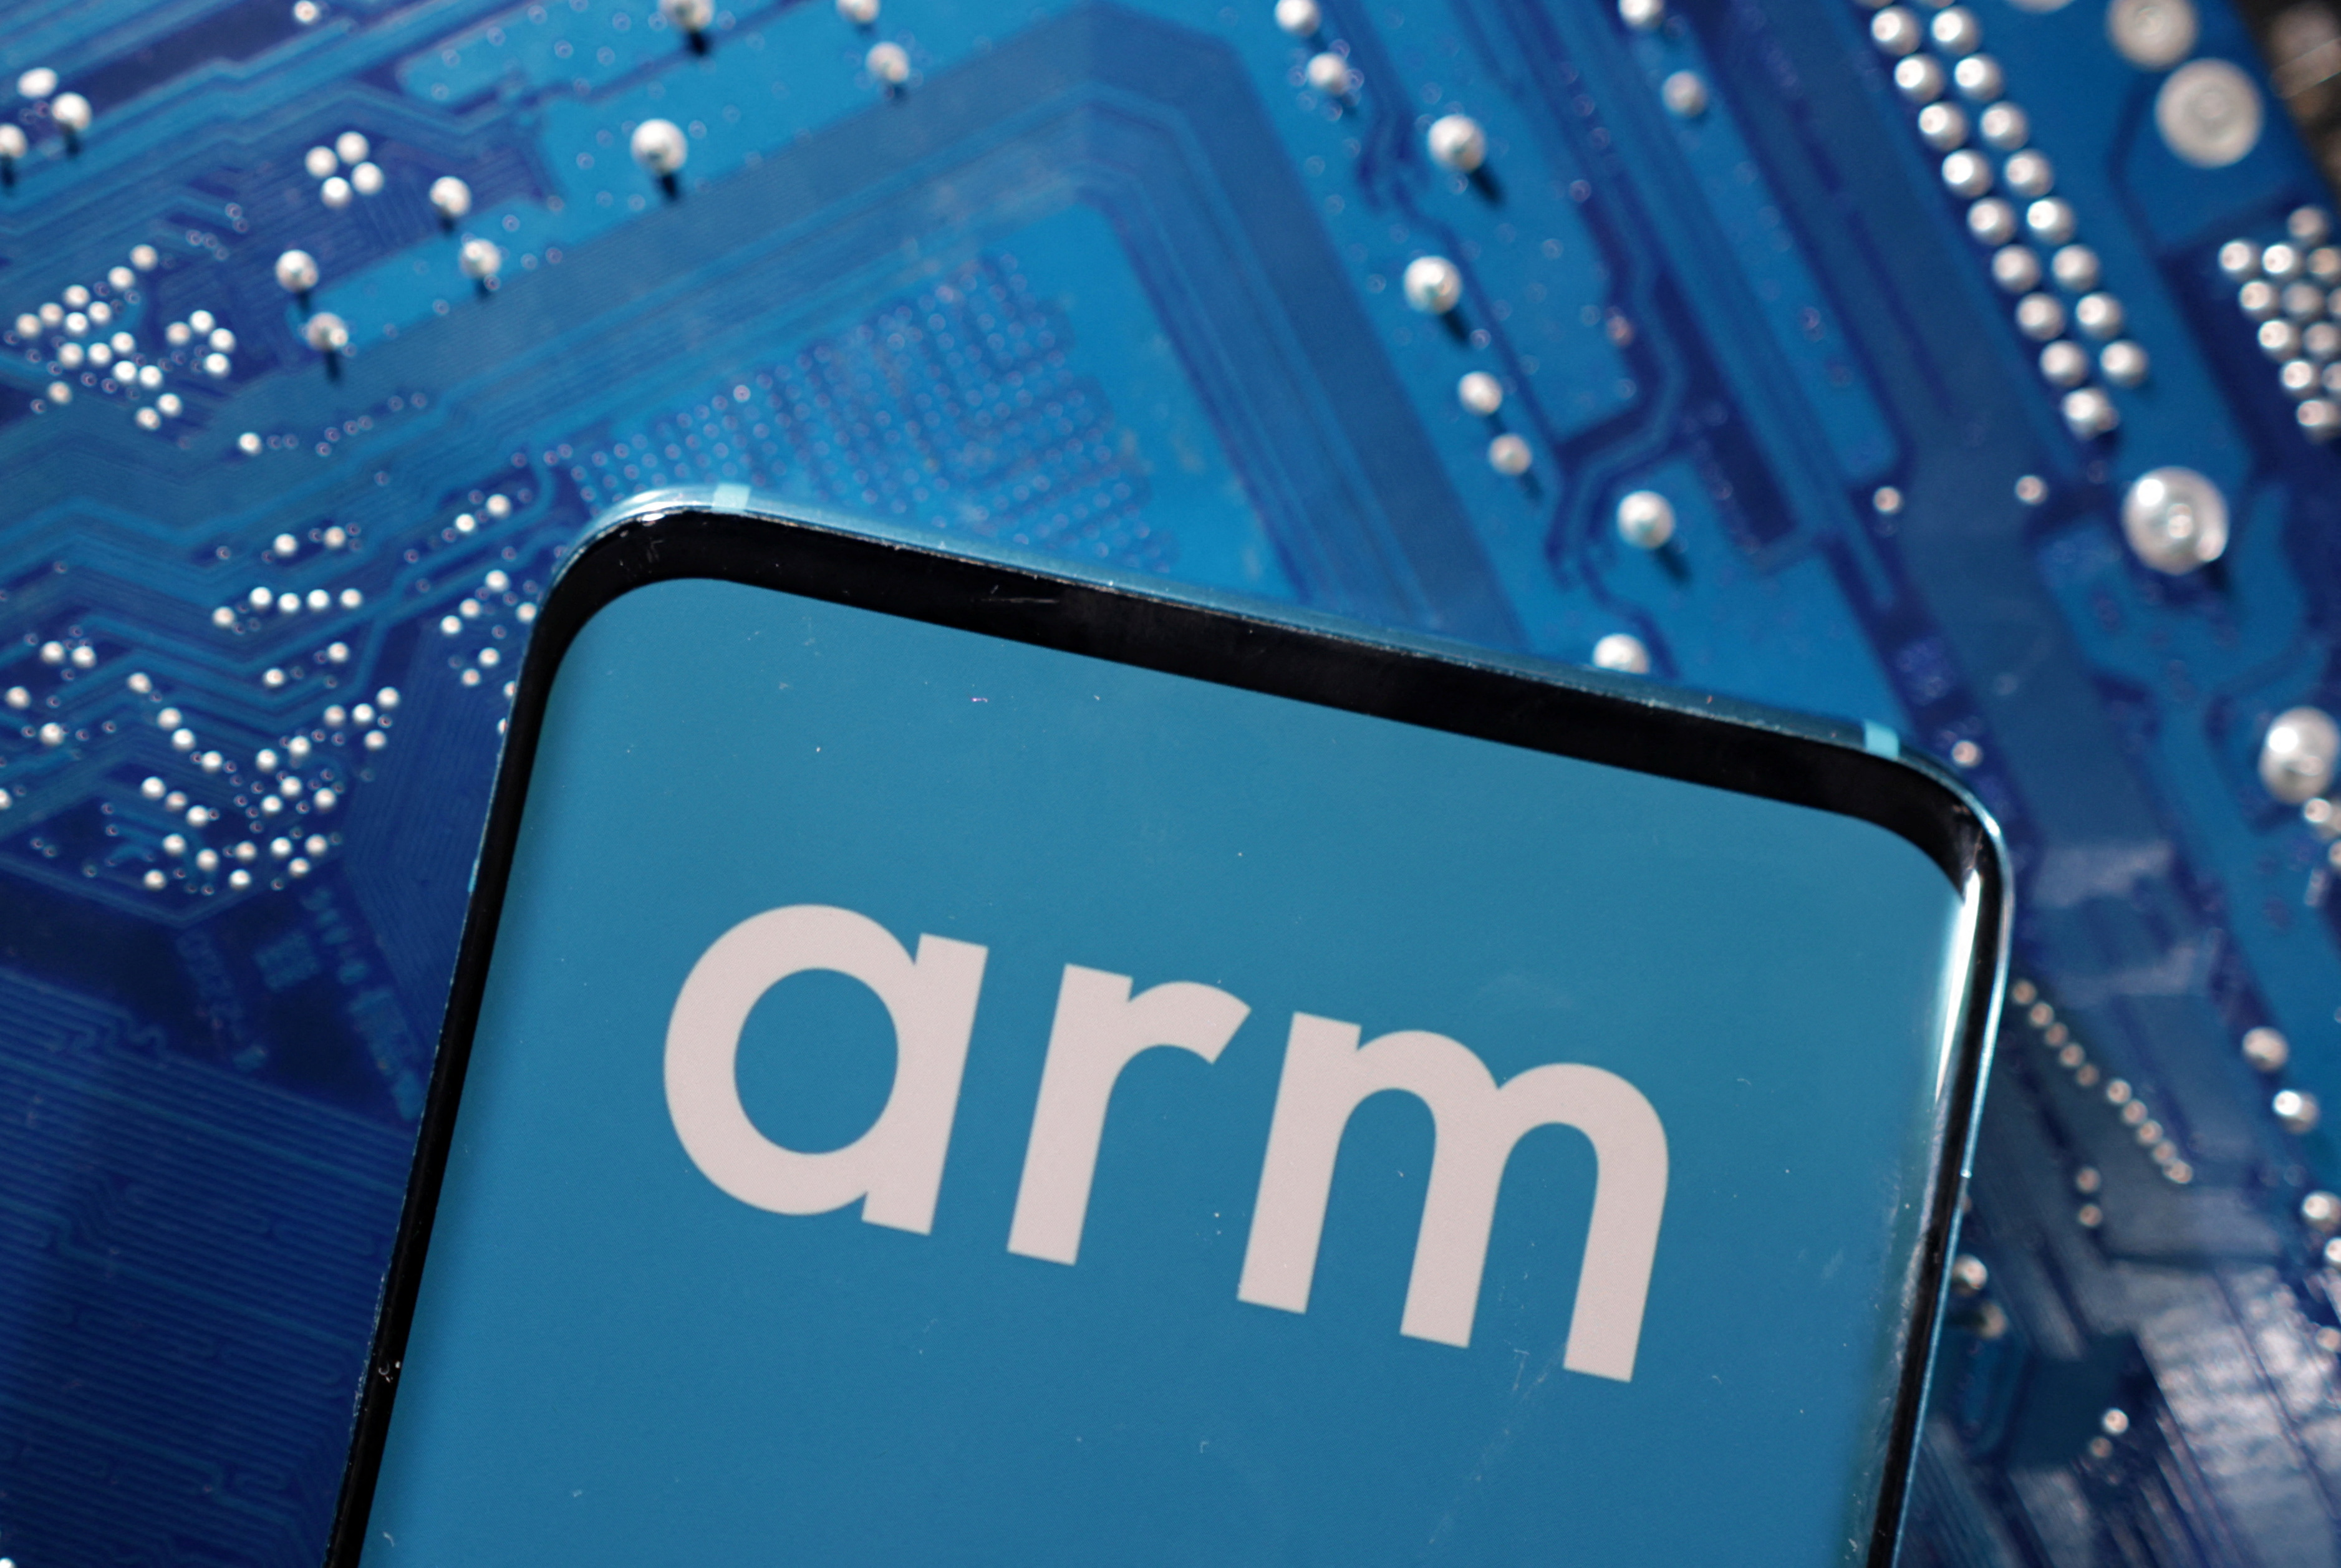 Illustration shows Arm Ltd logo